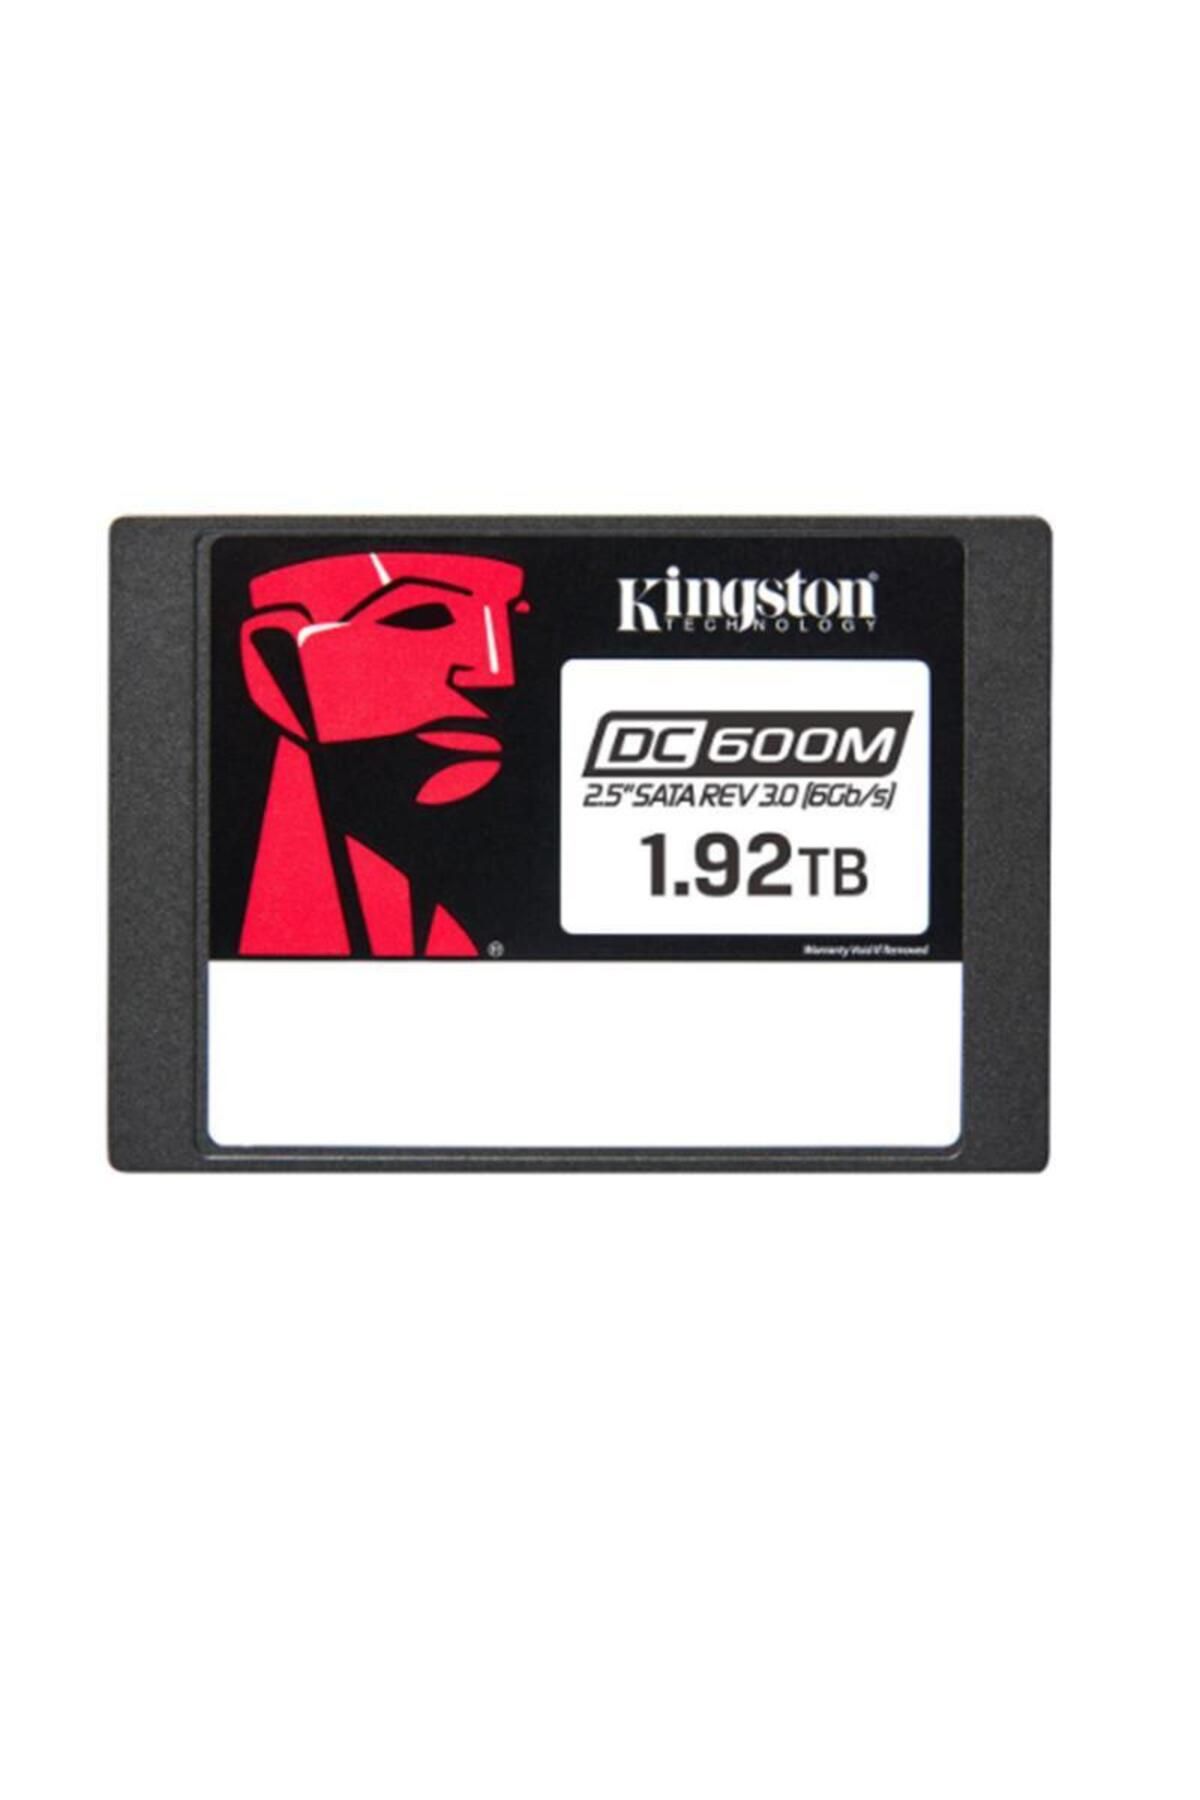 Kingston 1.92 TB KINGSTON 2.5" SATA3 SSD 560/530 SEDC600M/1920G